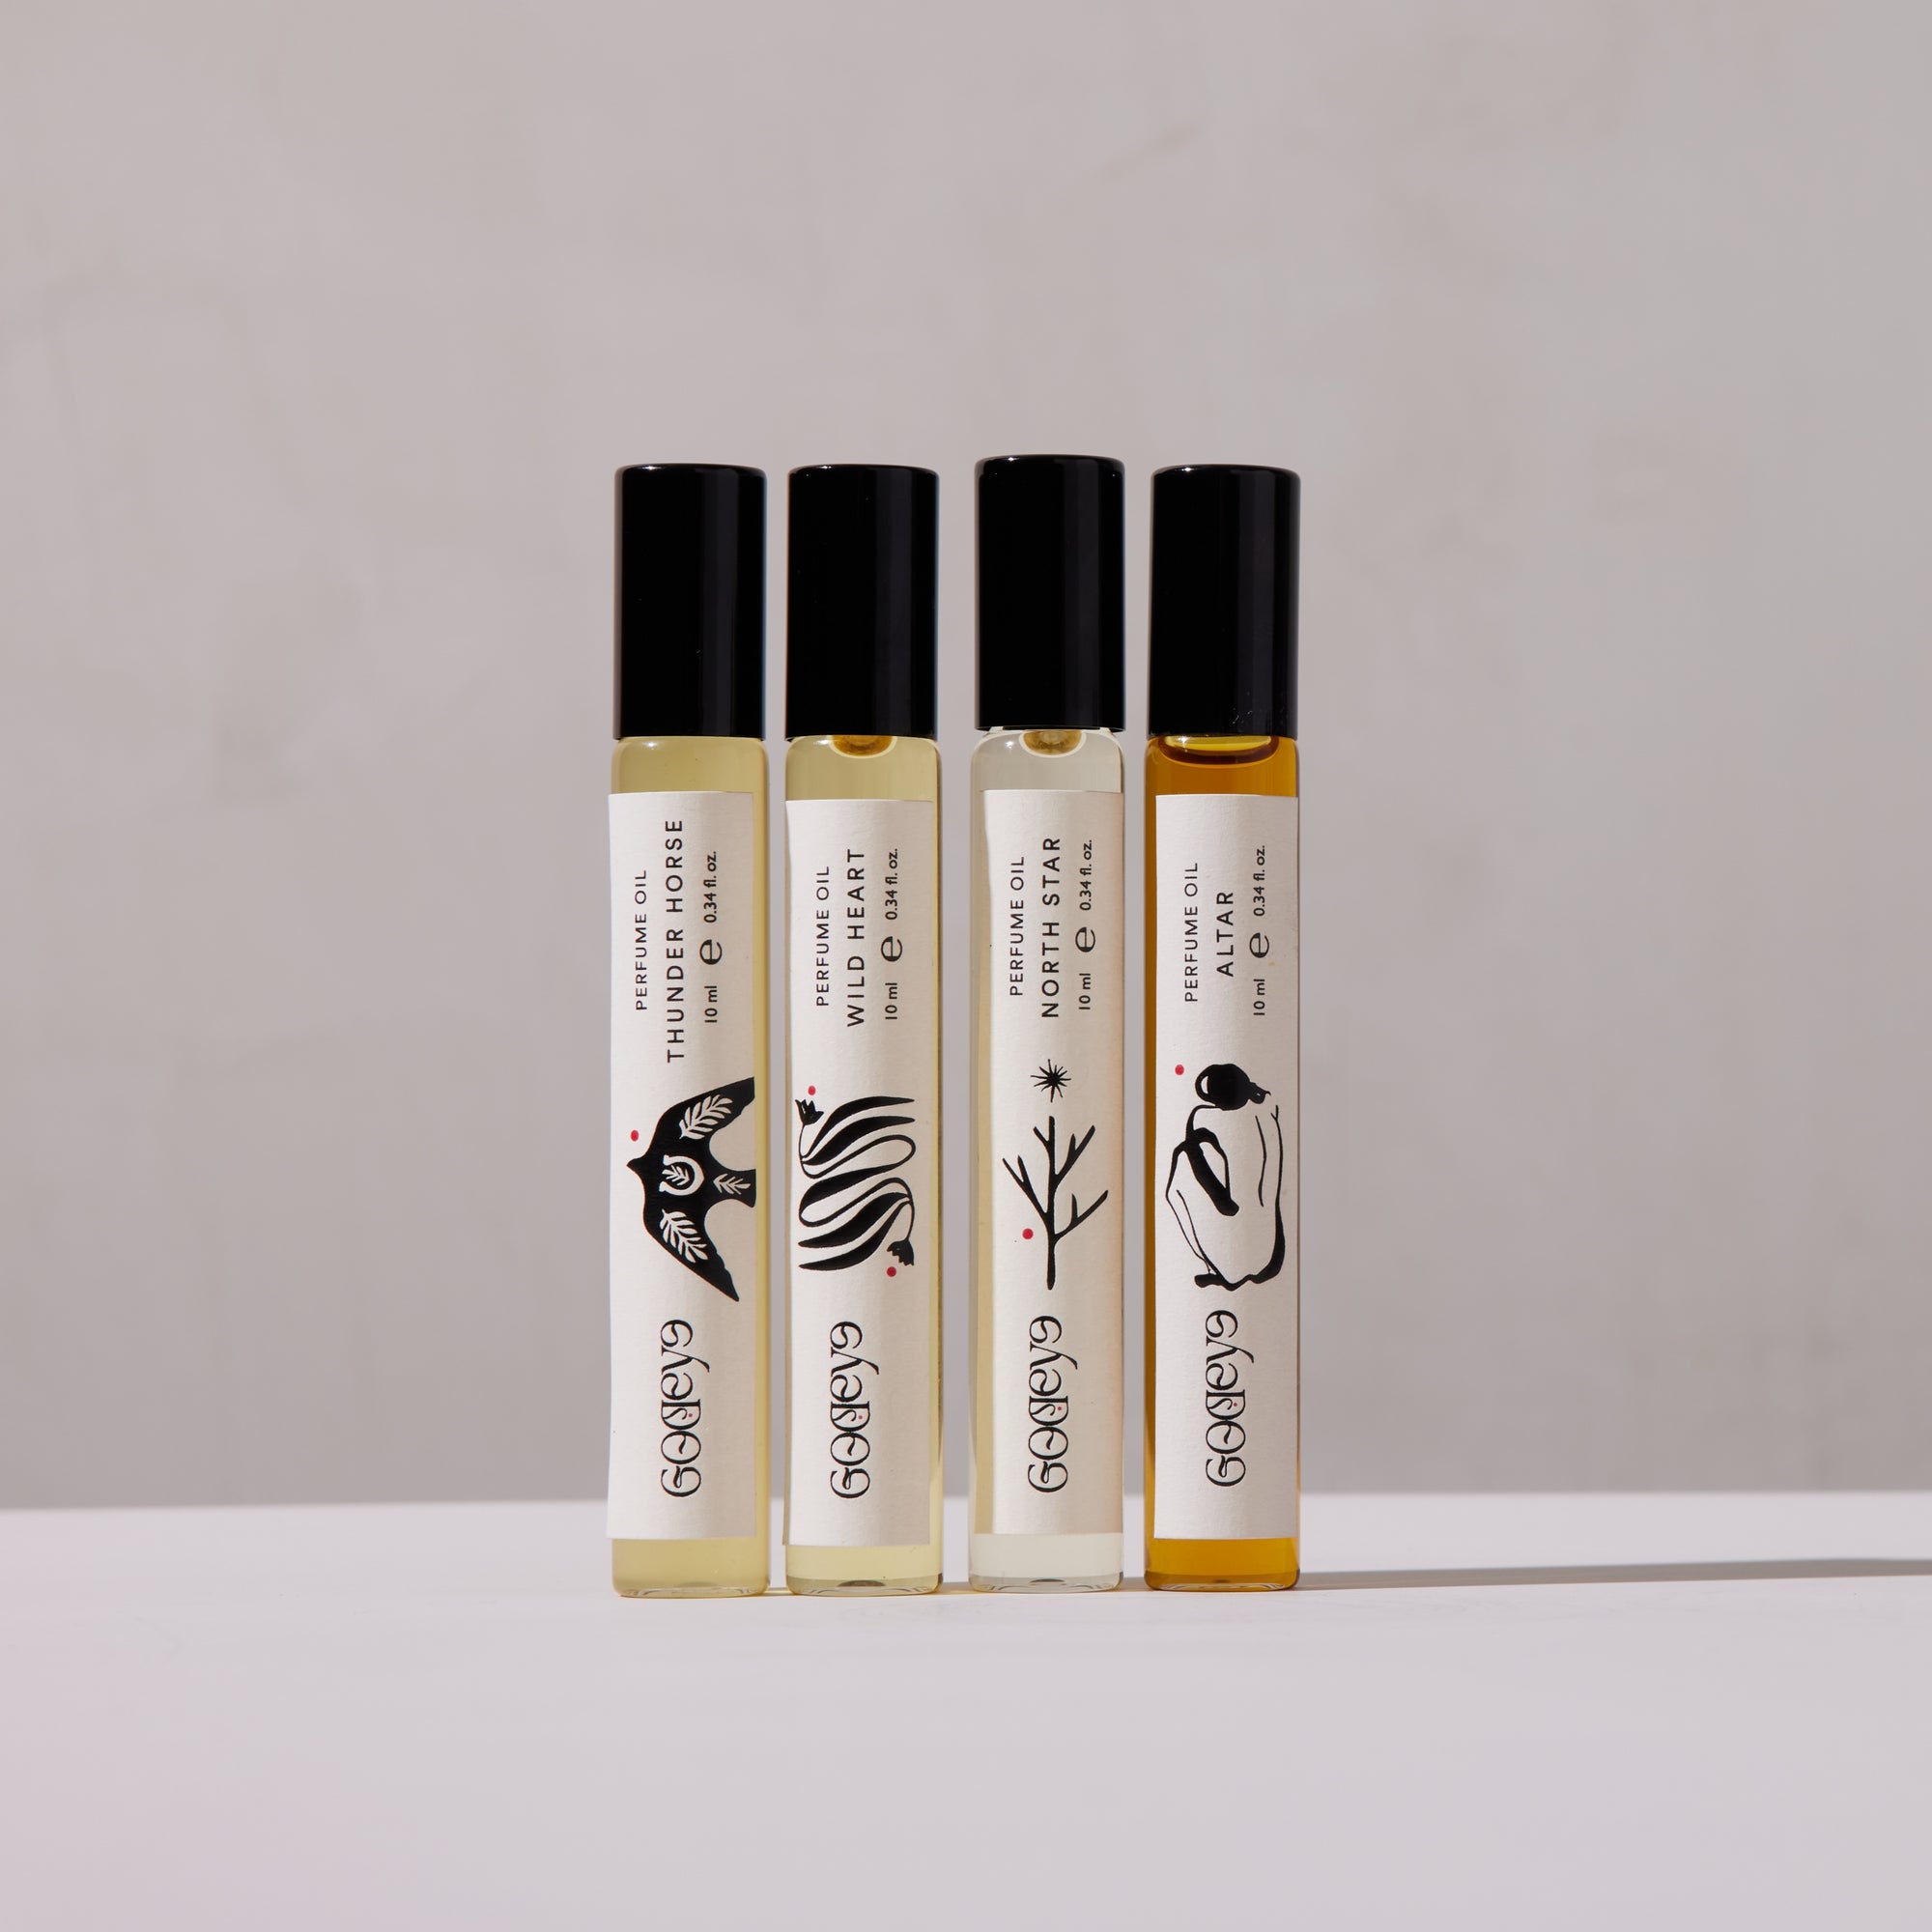 All Four Perfume Oils